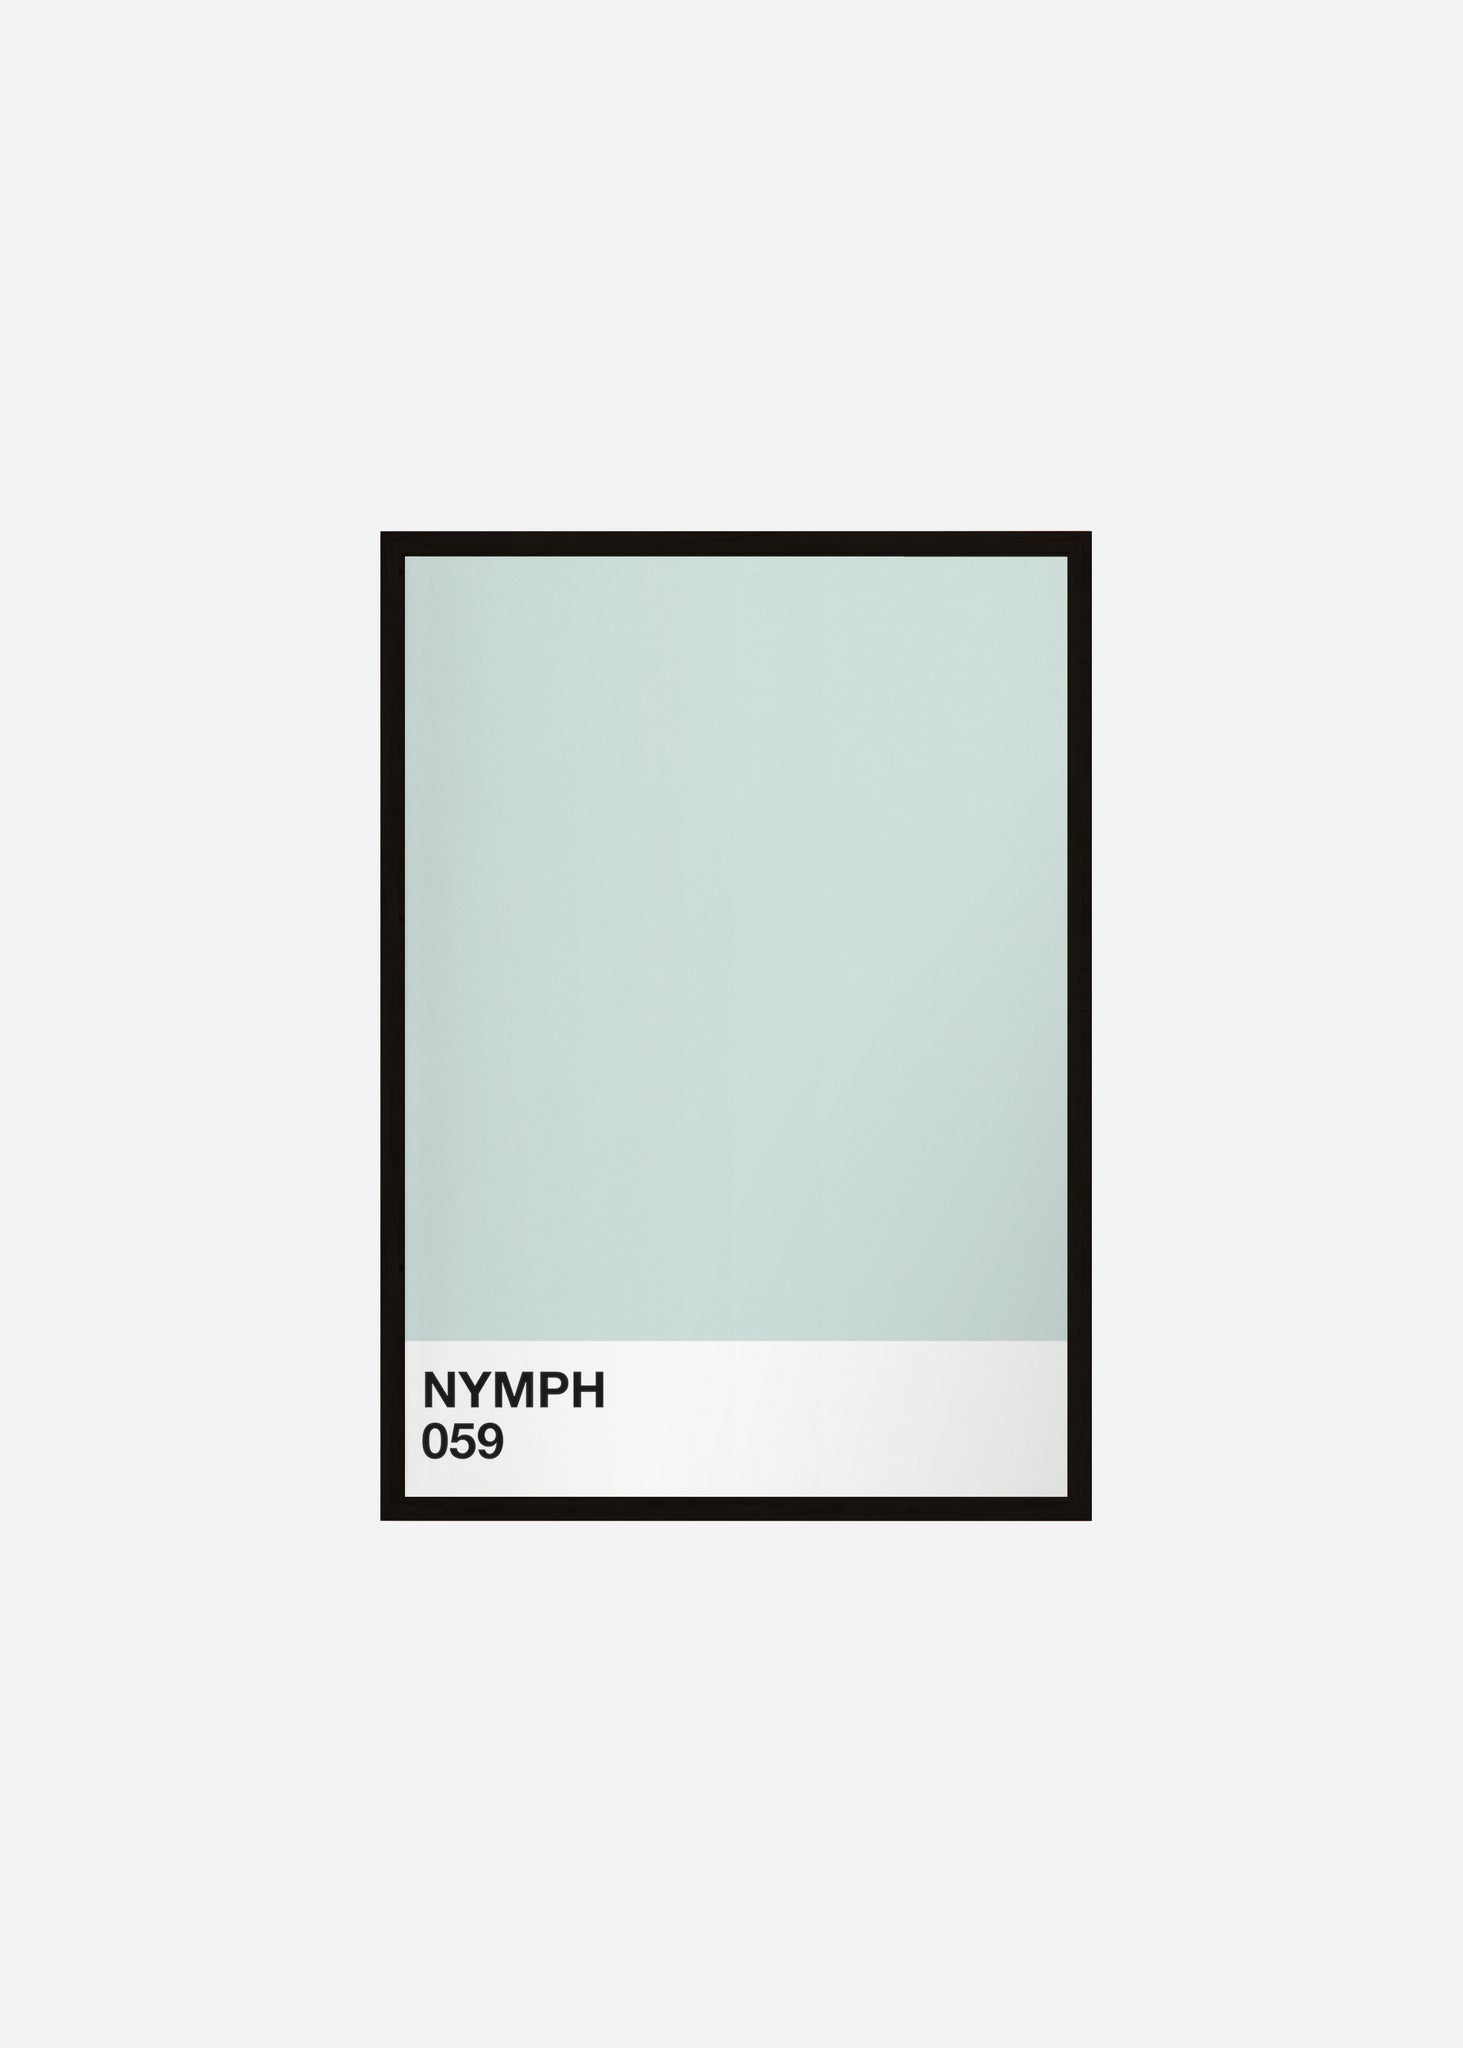 nymph Framed Print